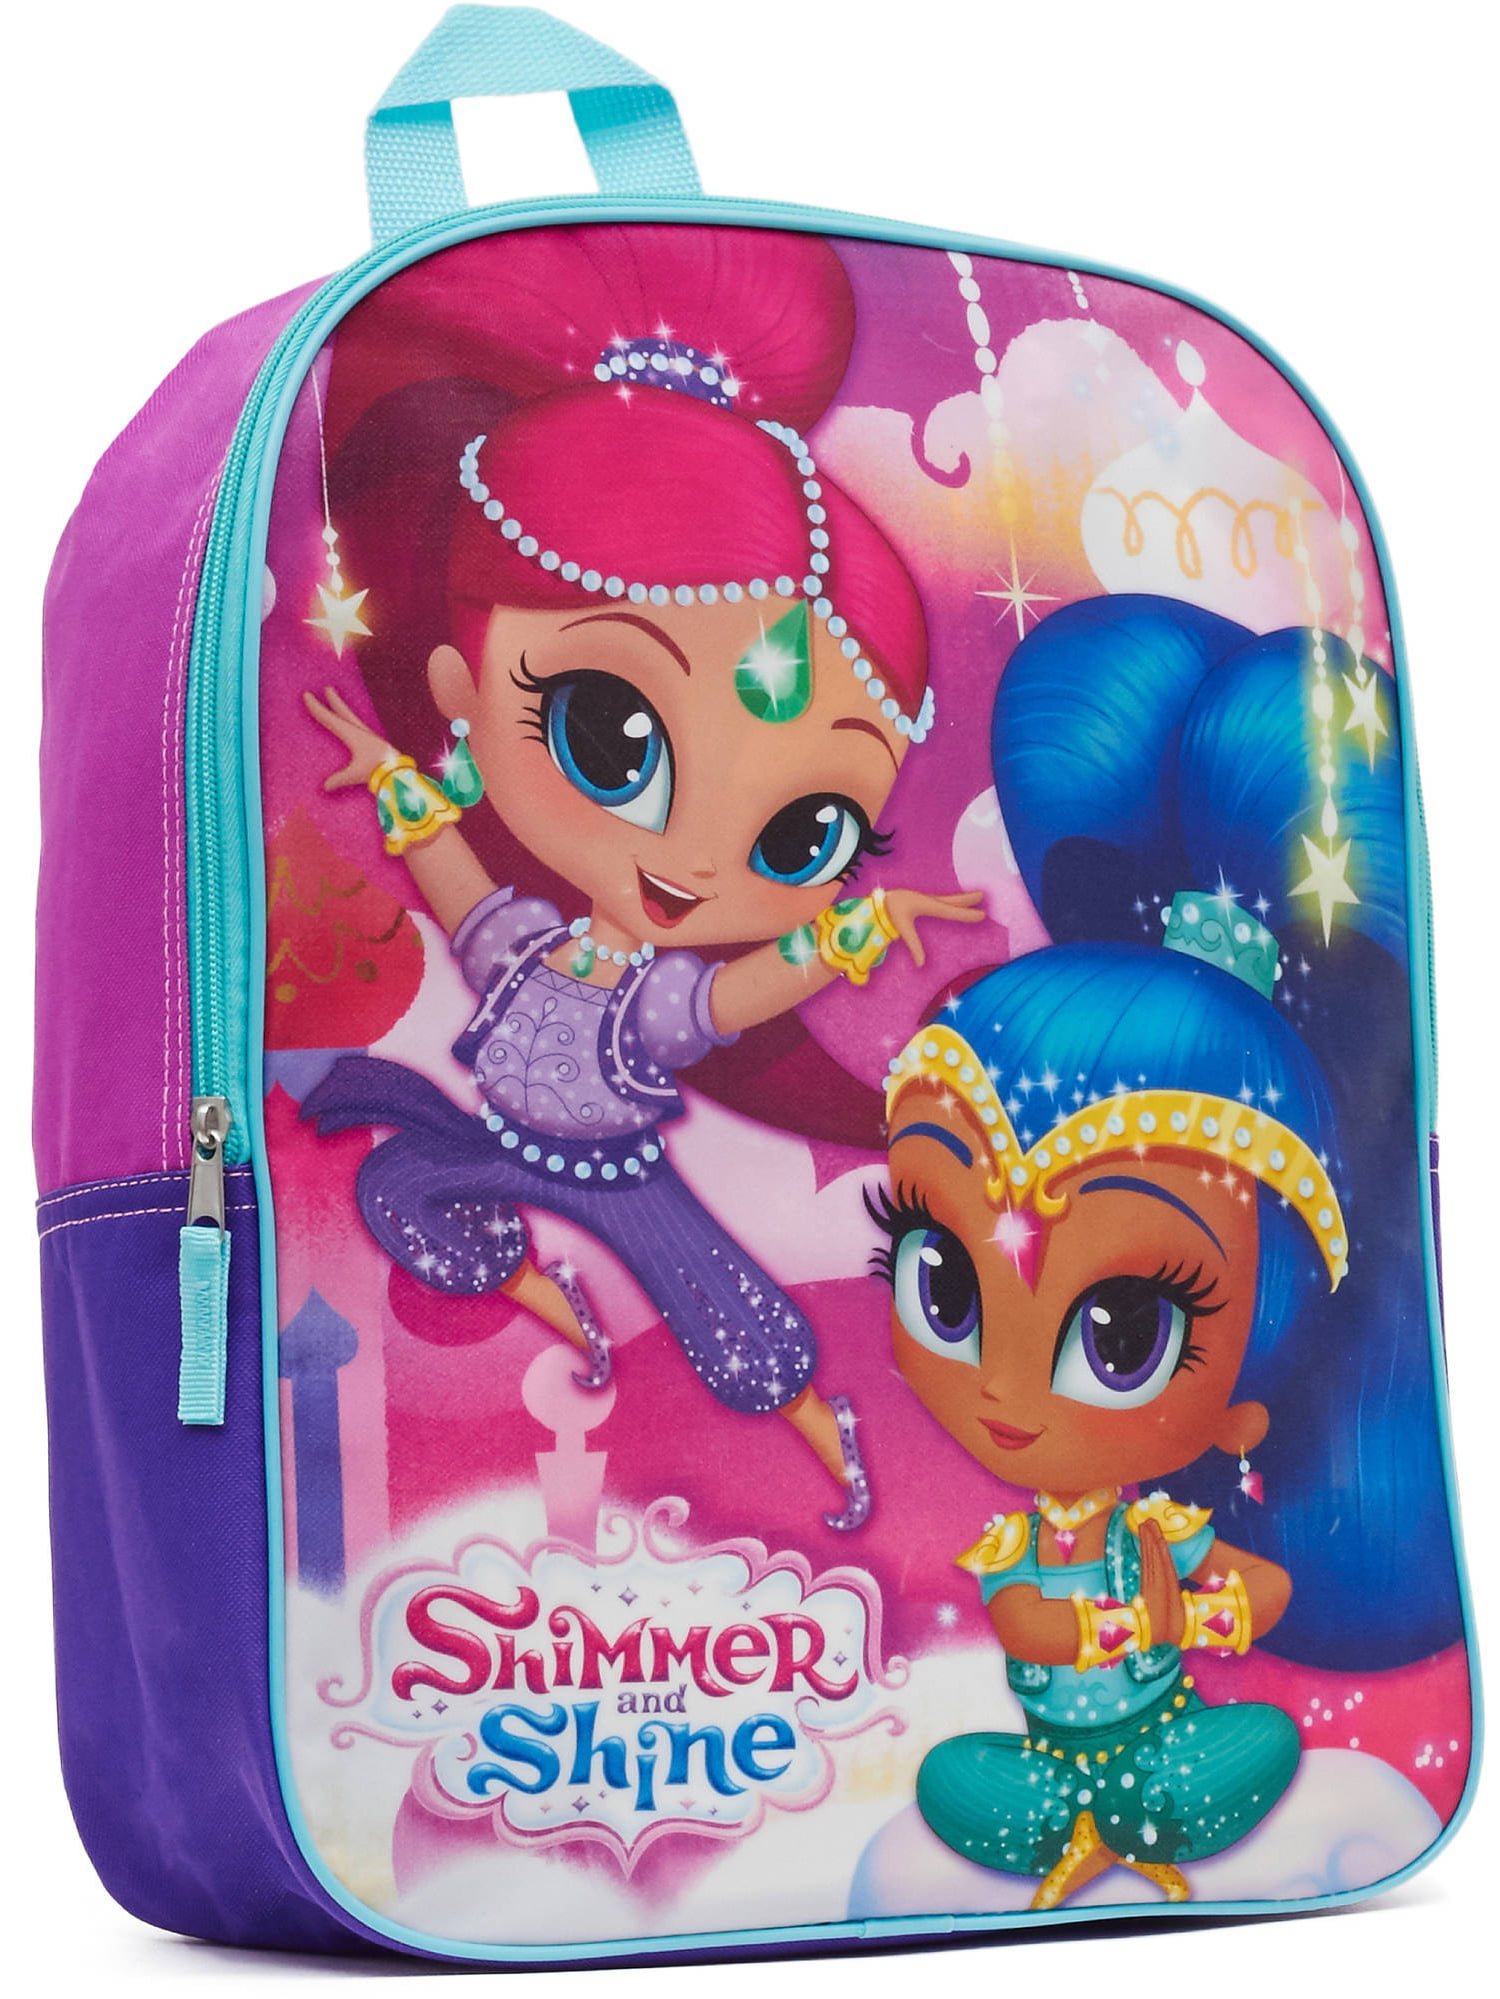 Shimmer & Shine Reversible Backpack Bags 